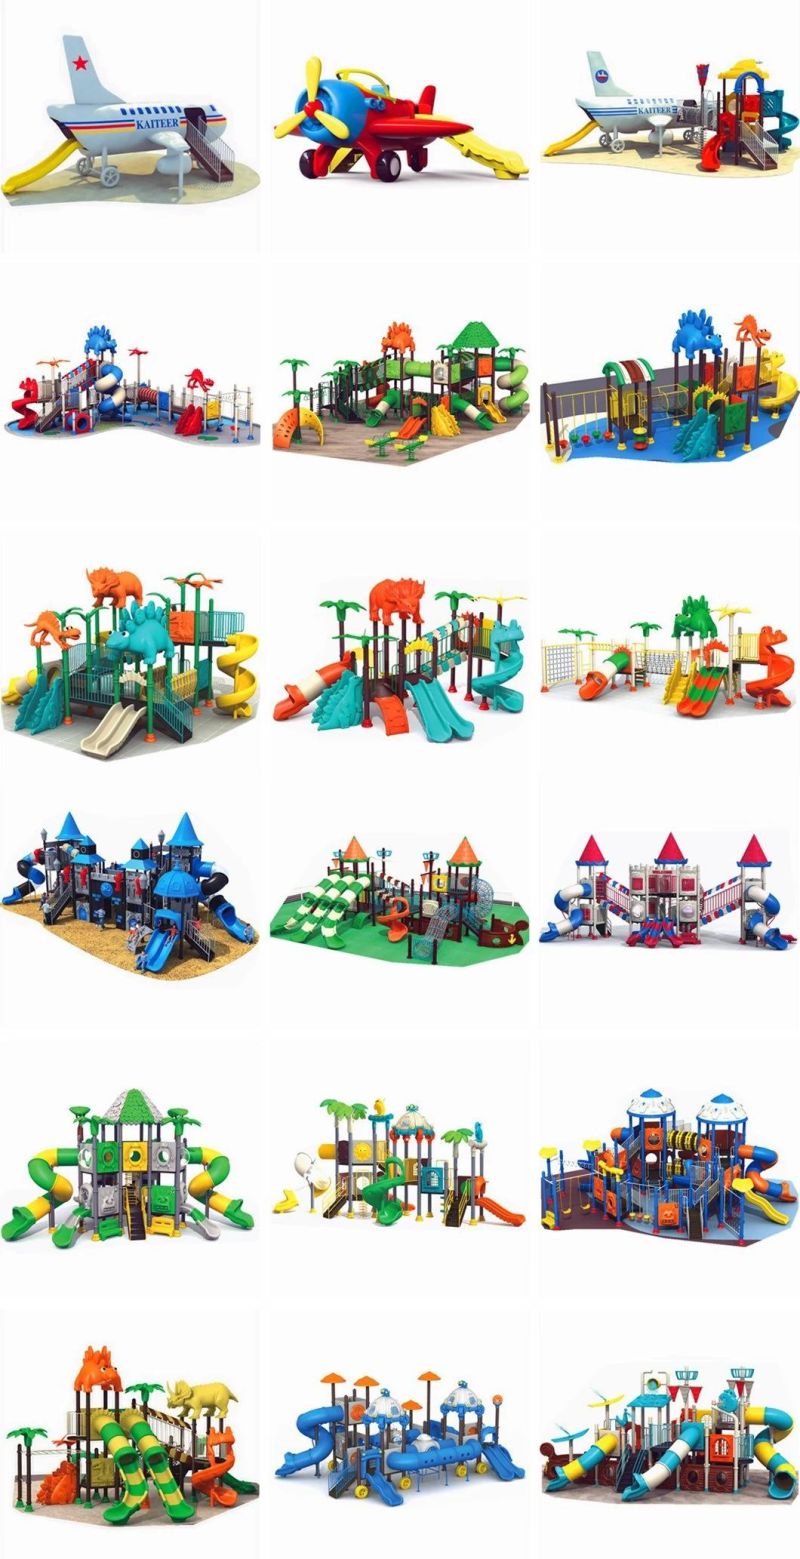 Kindergarten Outdoor Kids Playground Plastic Slide Amusement Park Equipment 300b